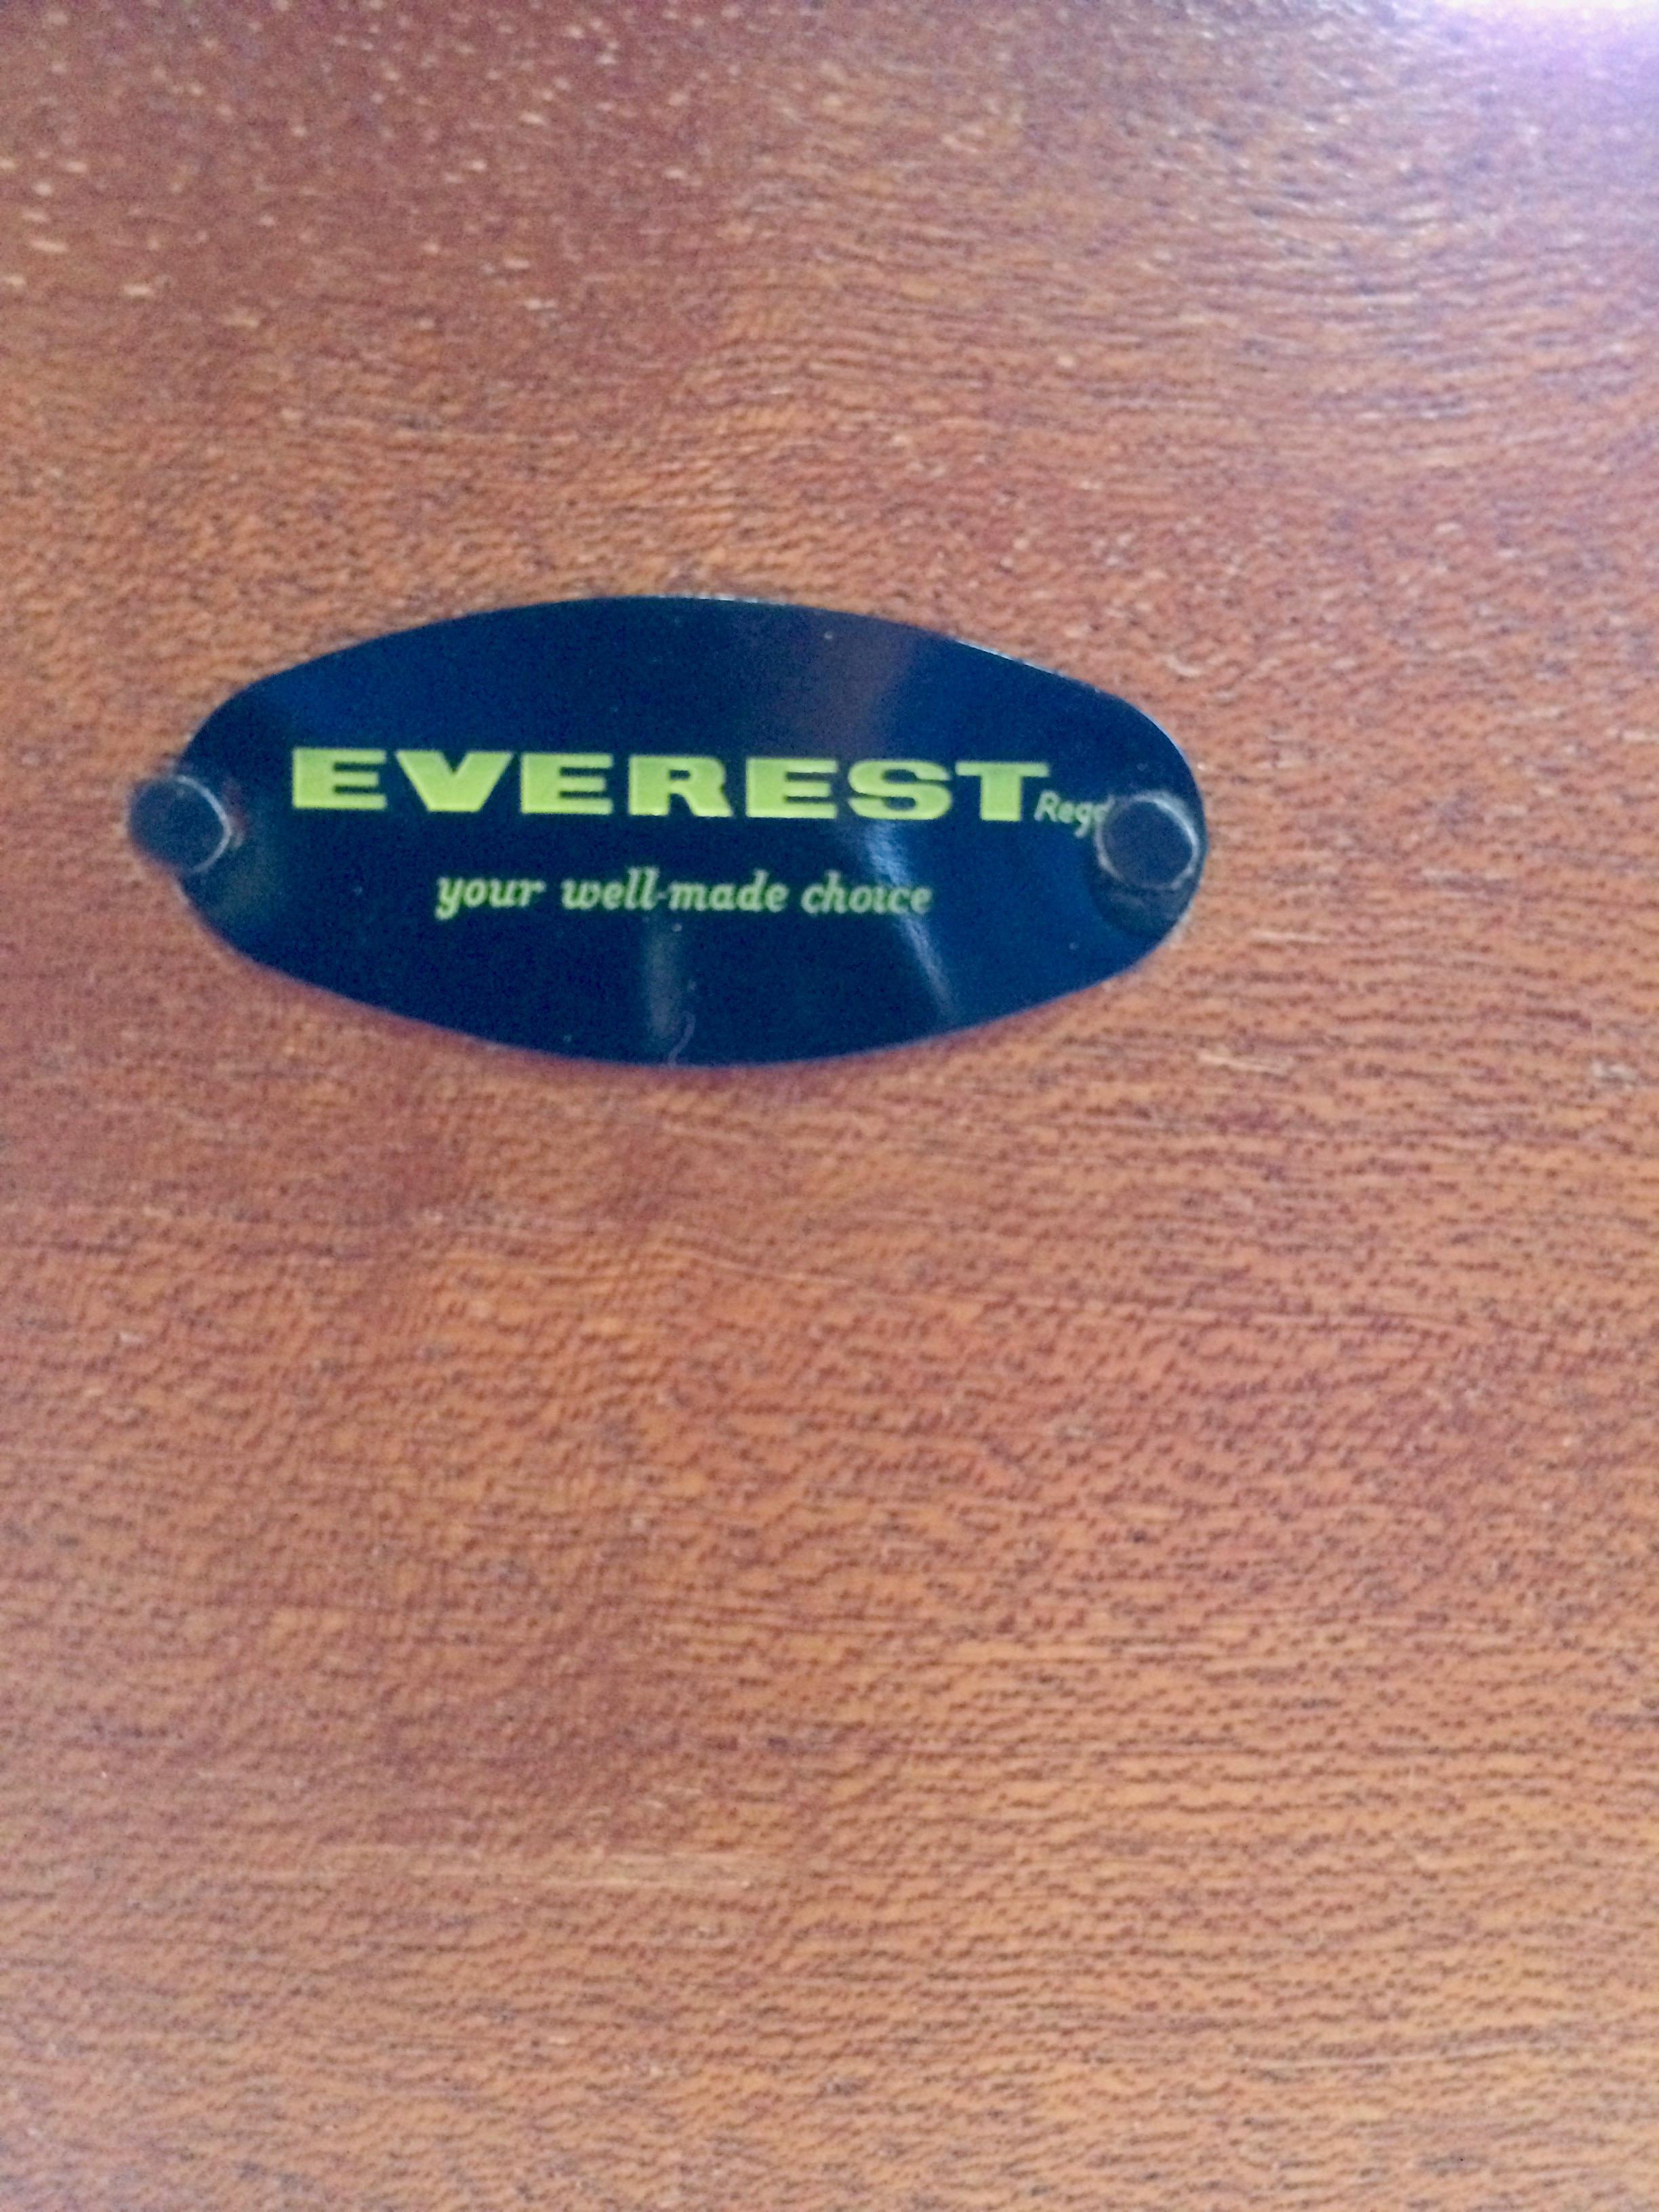 Ib Kofod-Larsen Rosewood Sideboard Credenza Buffet For Everest Midcentury 1960s 2